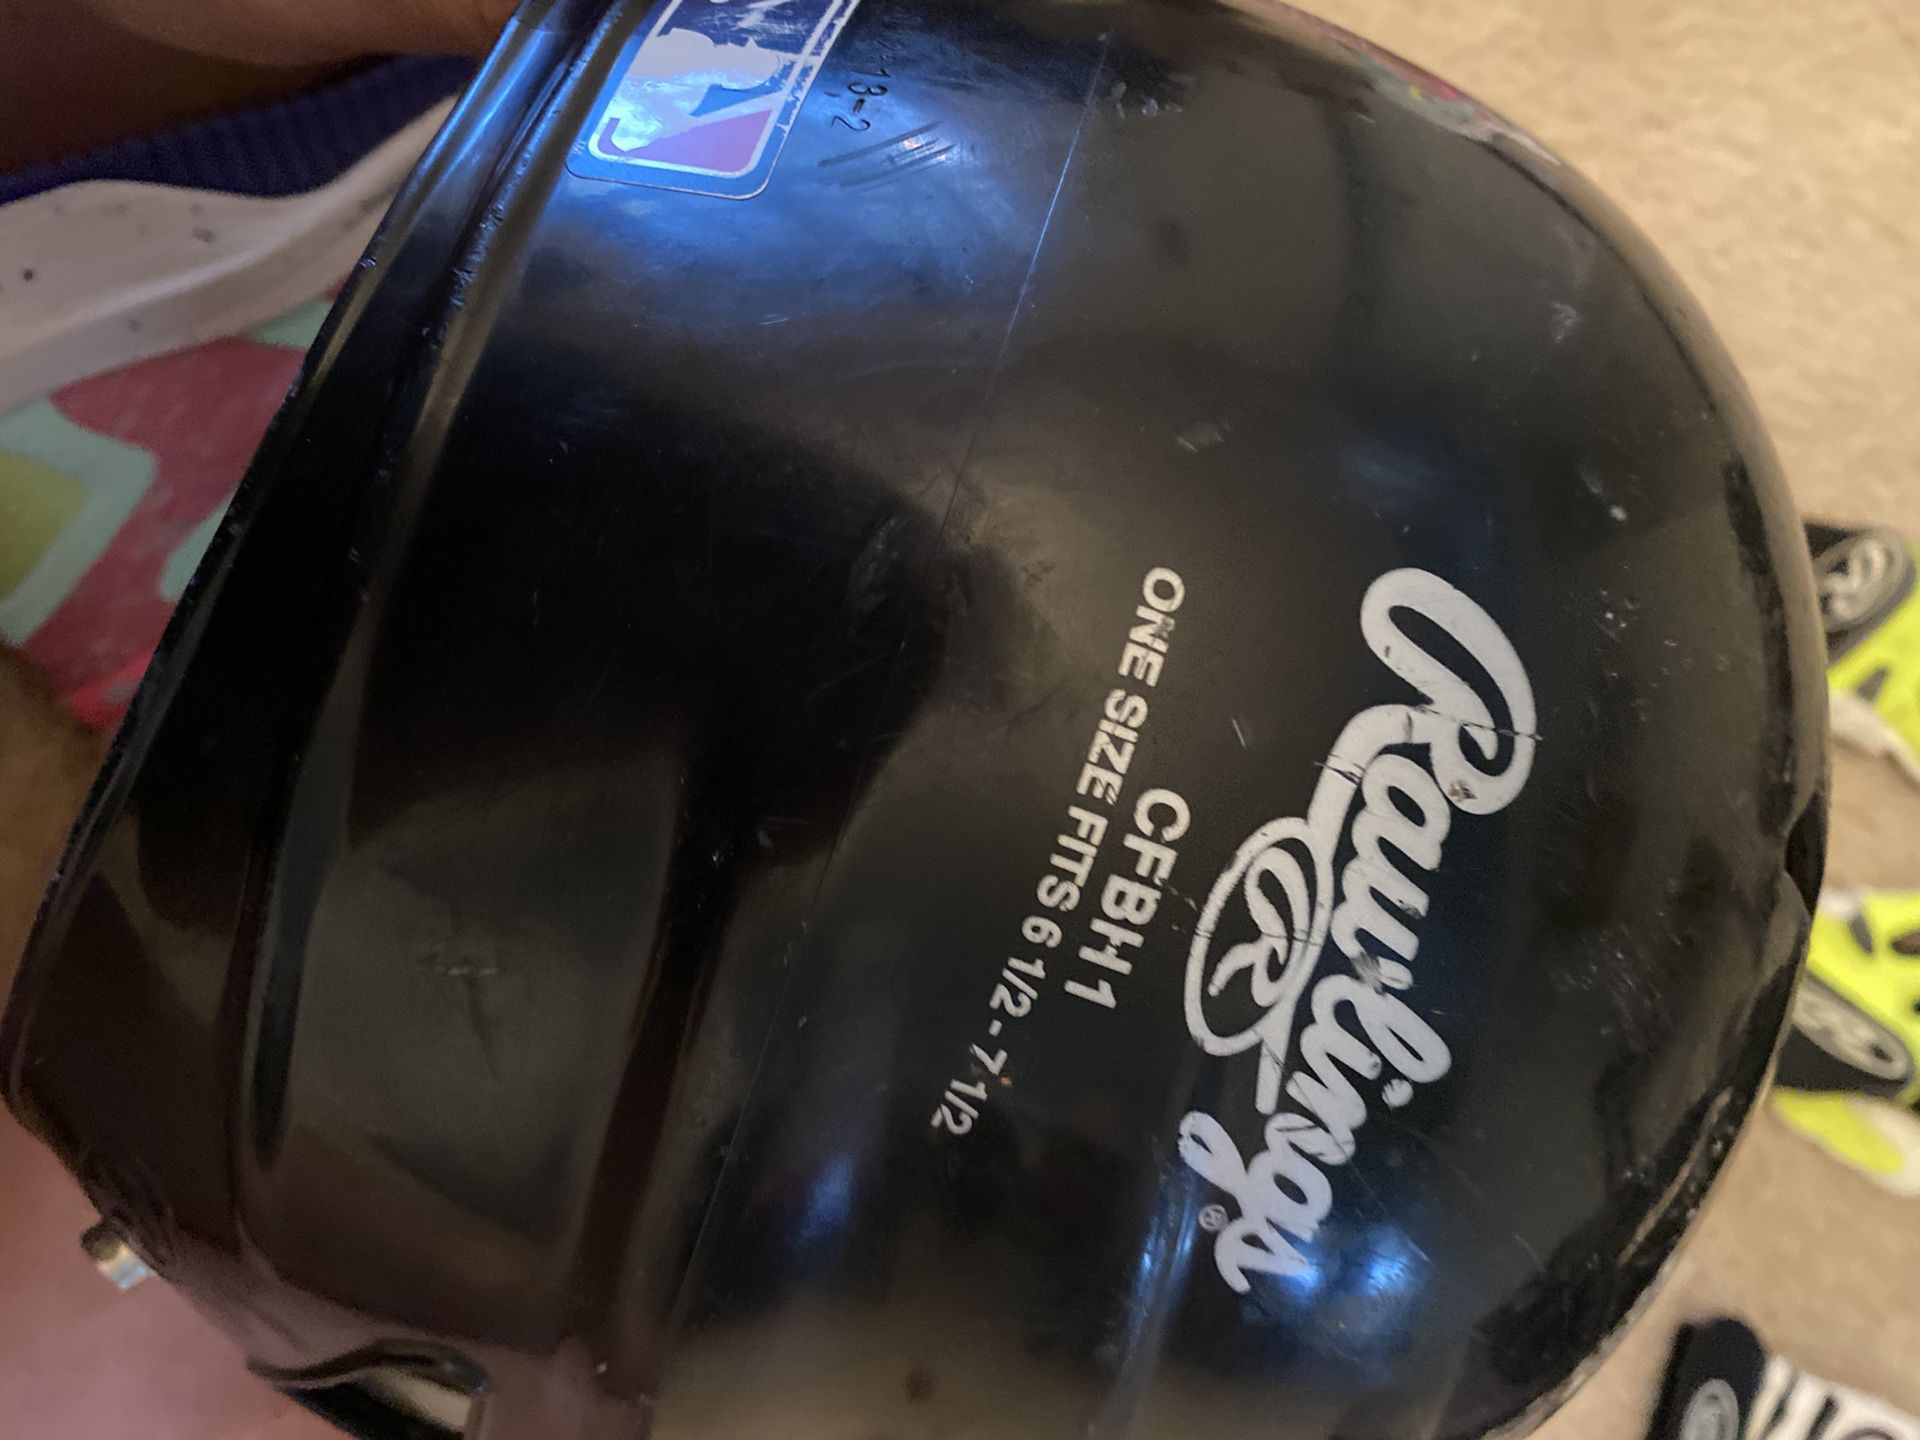 Youth Baseball Helmet $5, Red Glove $5